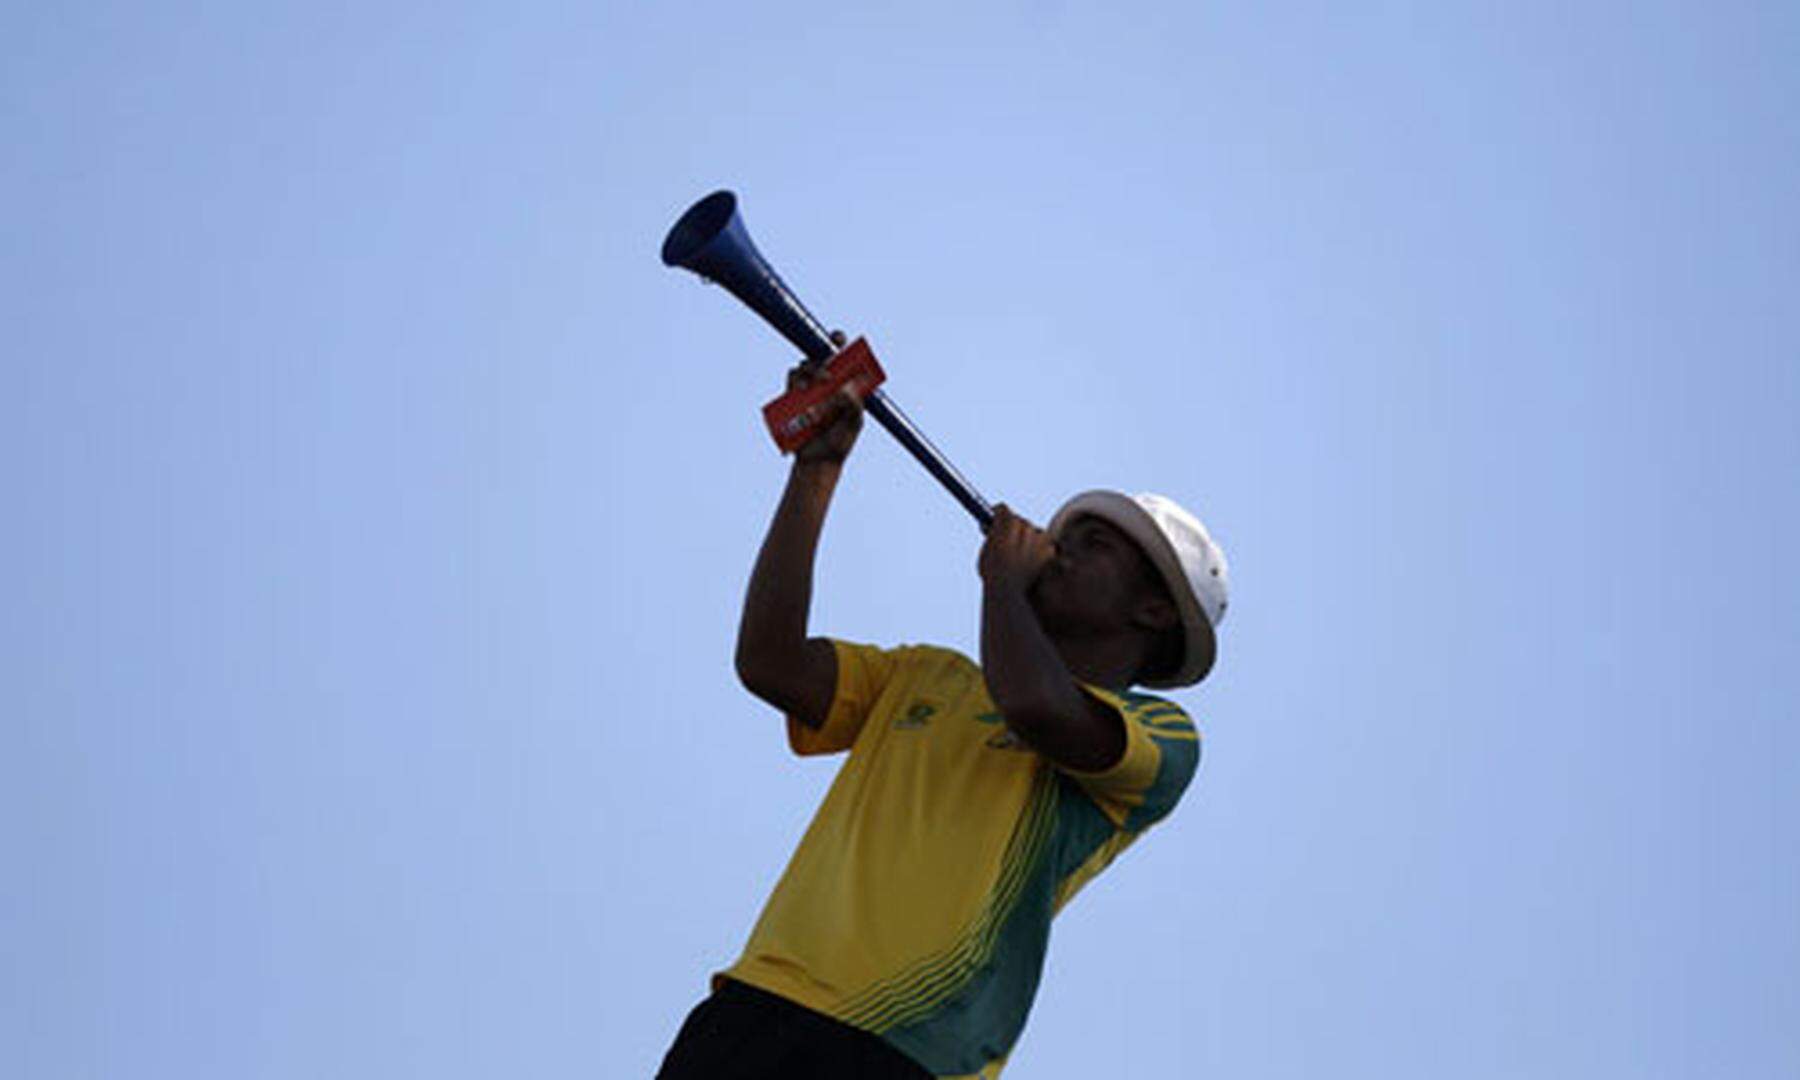 https://img.diepresse.com/public/incoming/amzzc3-geliebt_gehasst_erfinder_vuvuzela_vuvu20100620190210.jpg/alternates/ORIGINAL/geliebt_gehasst_erfinder_vuvuzela_vuvu20100620190210.jpg